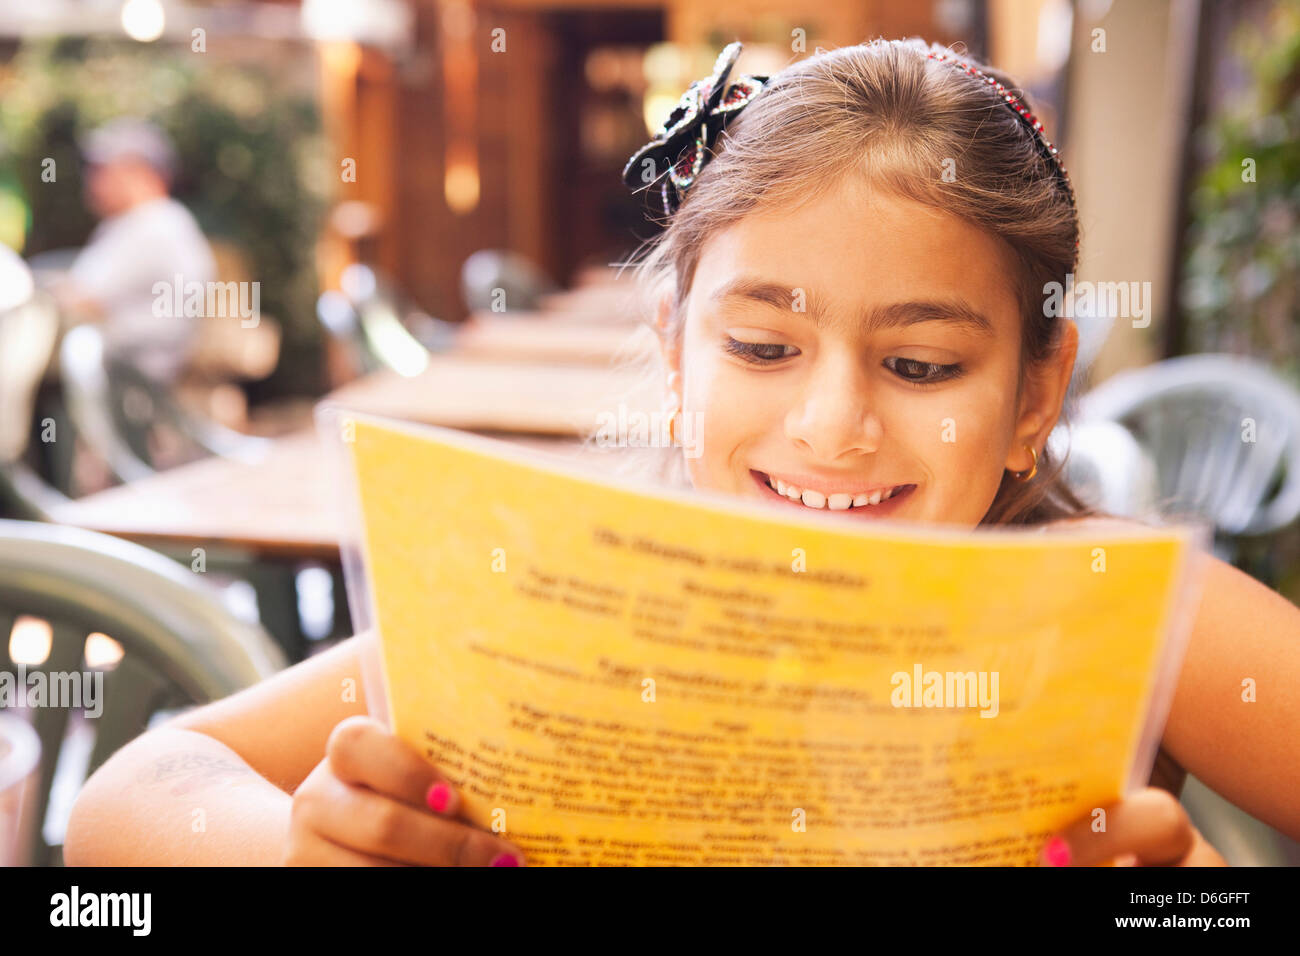 Mixed race girl reading menu in restaurant Stock Photo